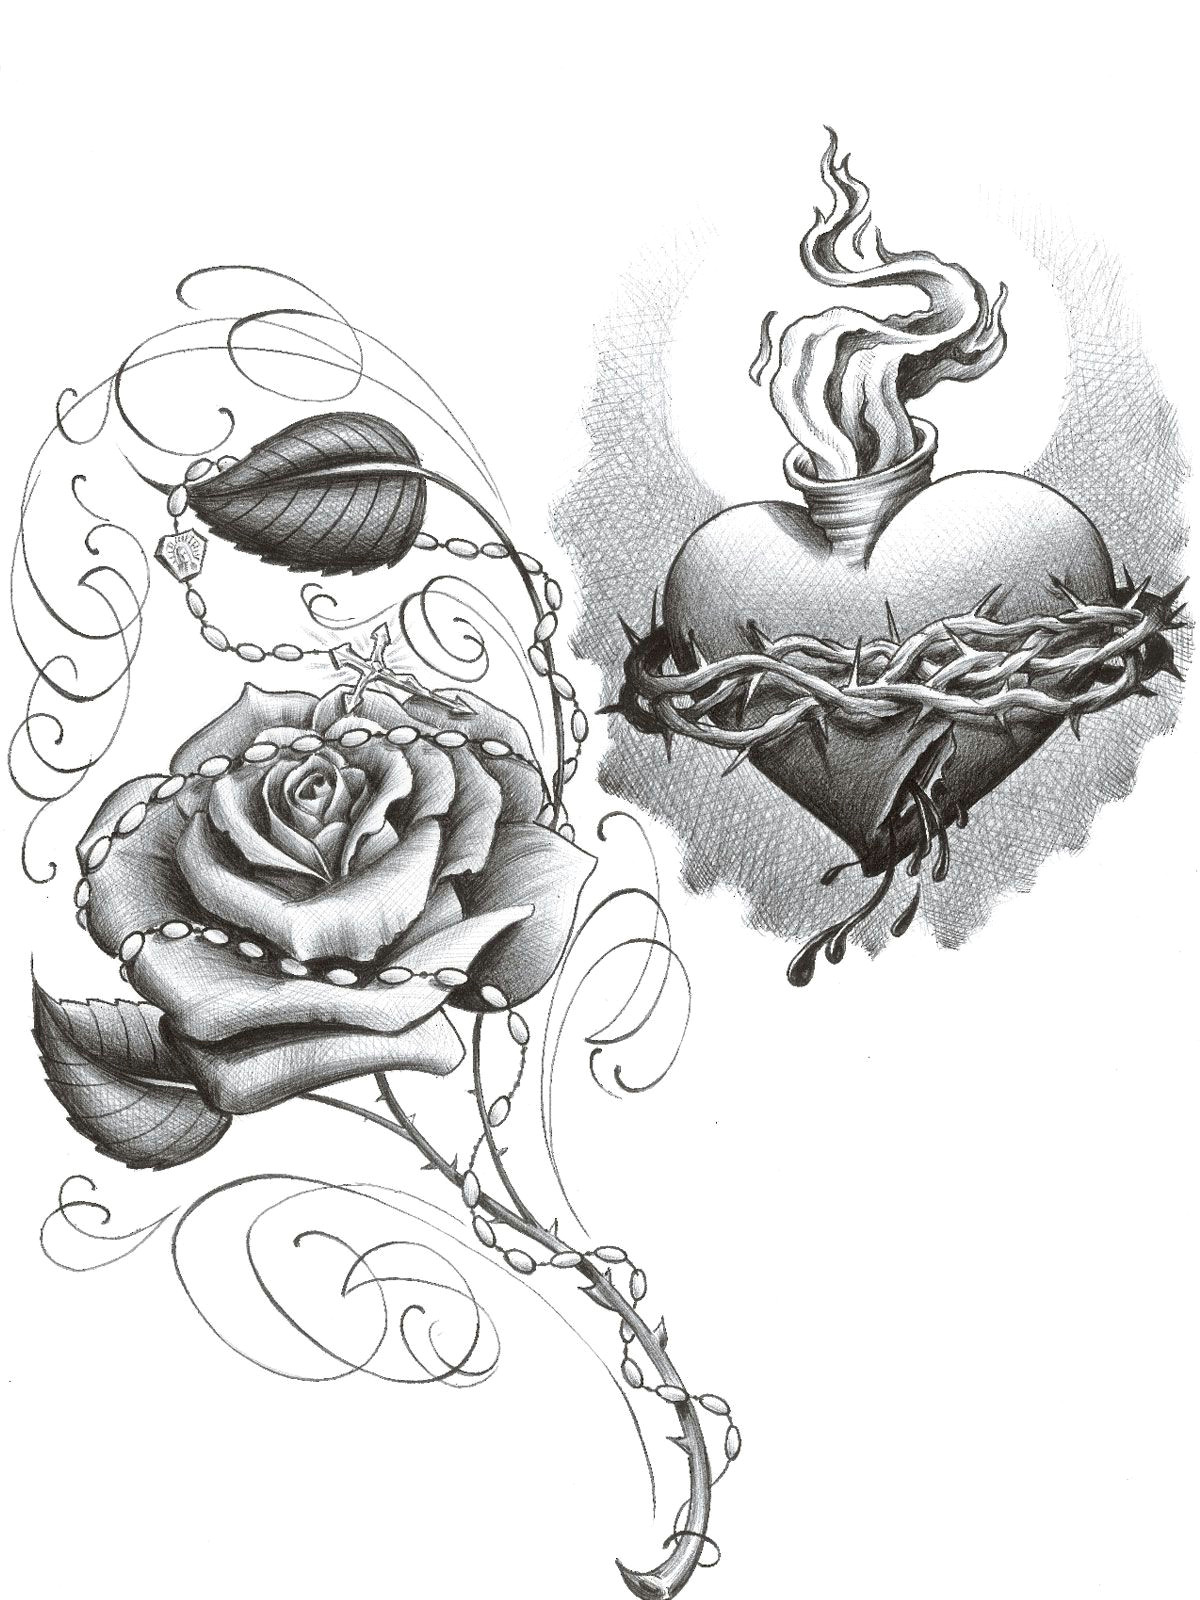 Lowrider Arte Drawings Of Roses Lowrider Drawings Pictures Lowrider Art Image Lowrider Art